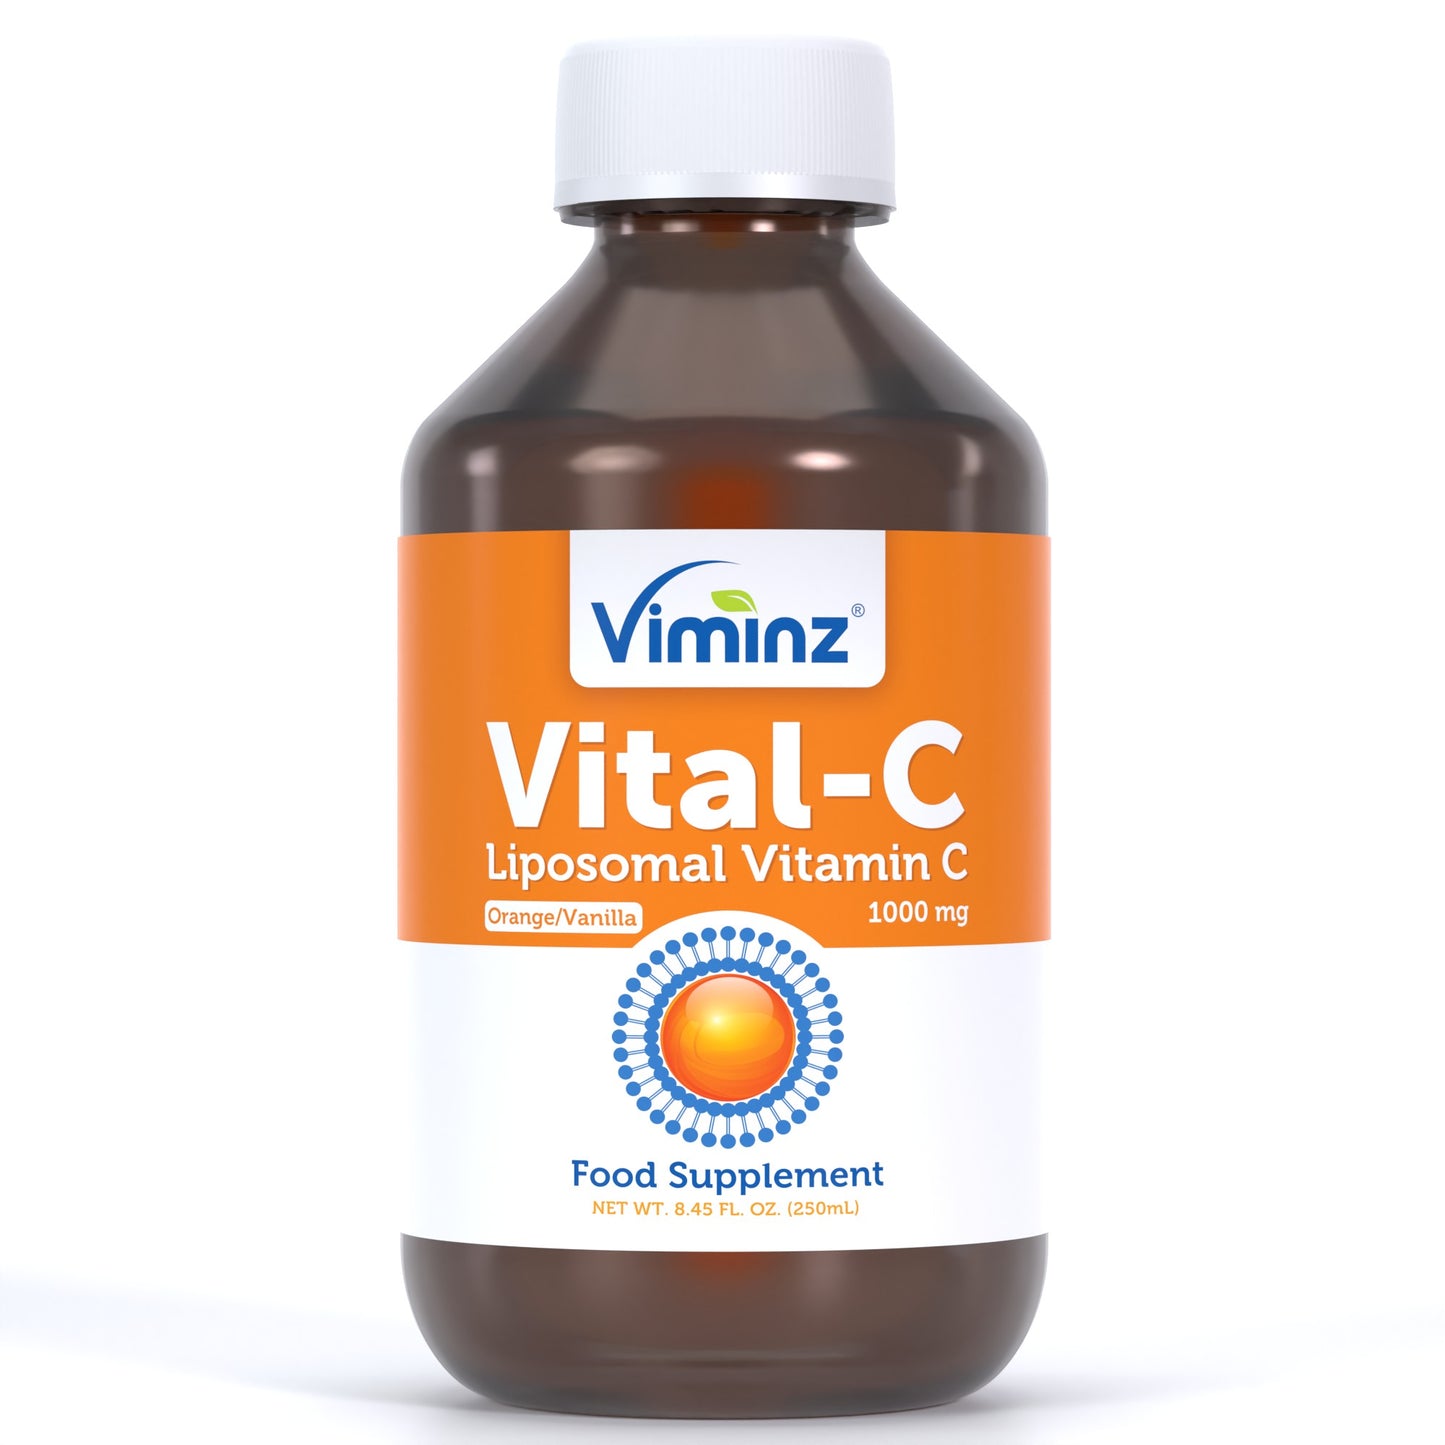 VITAL-C Vitamine C liposomale formule liquide 1000 mg